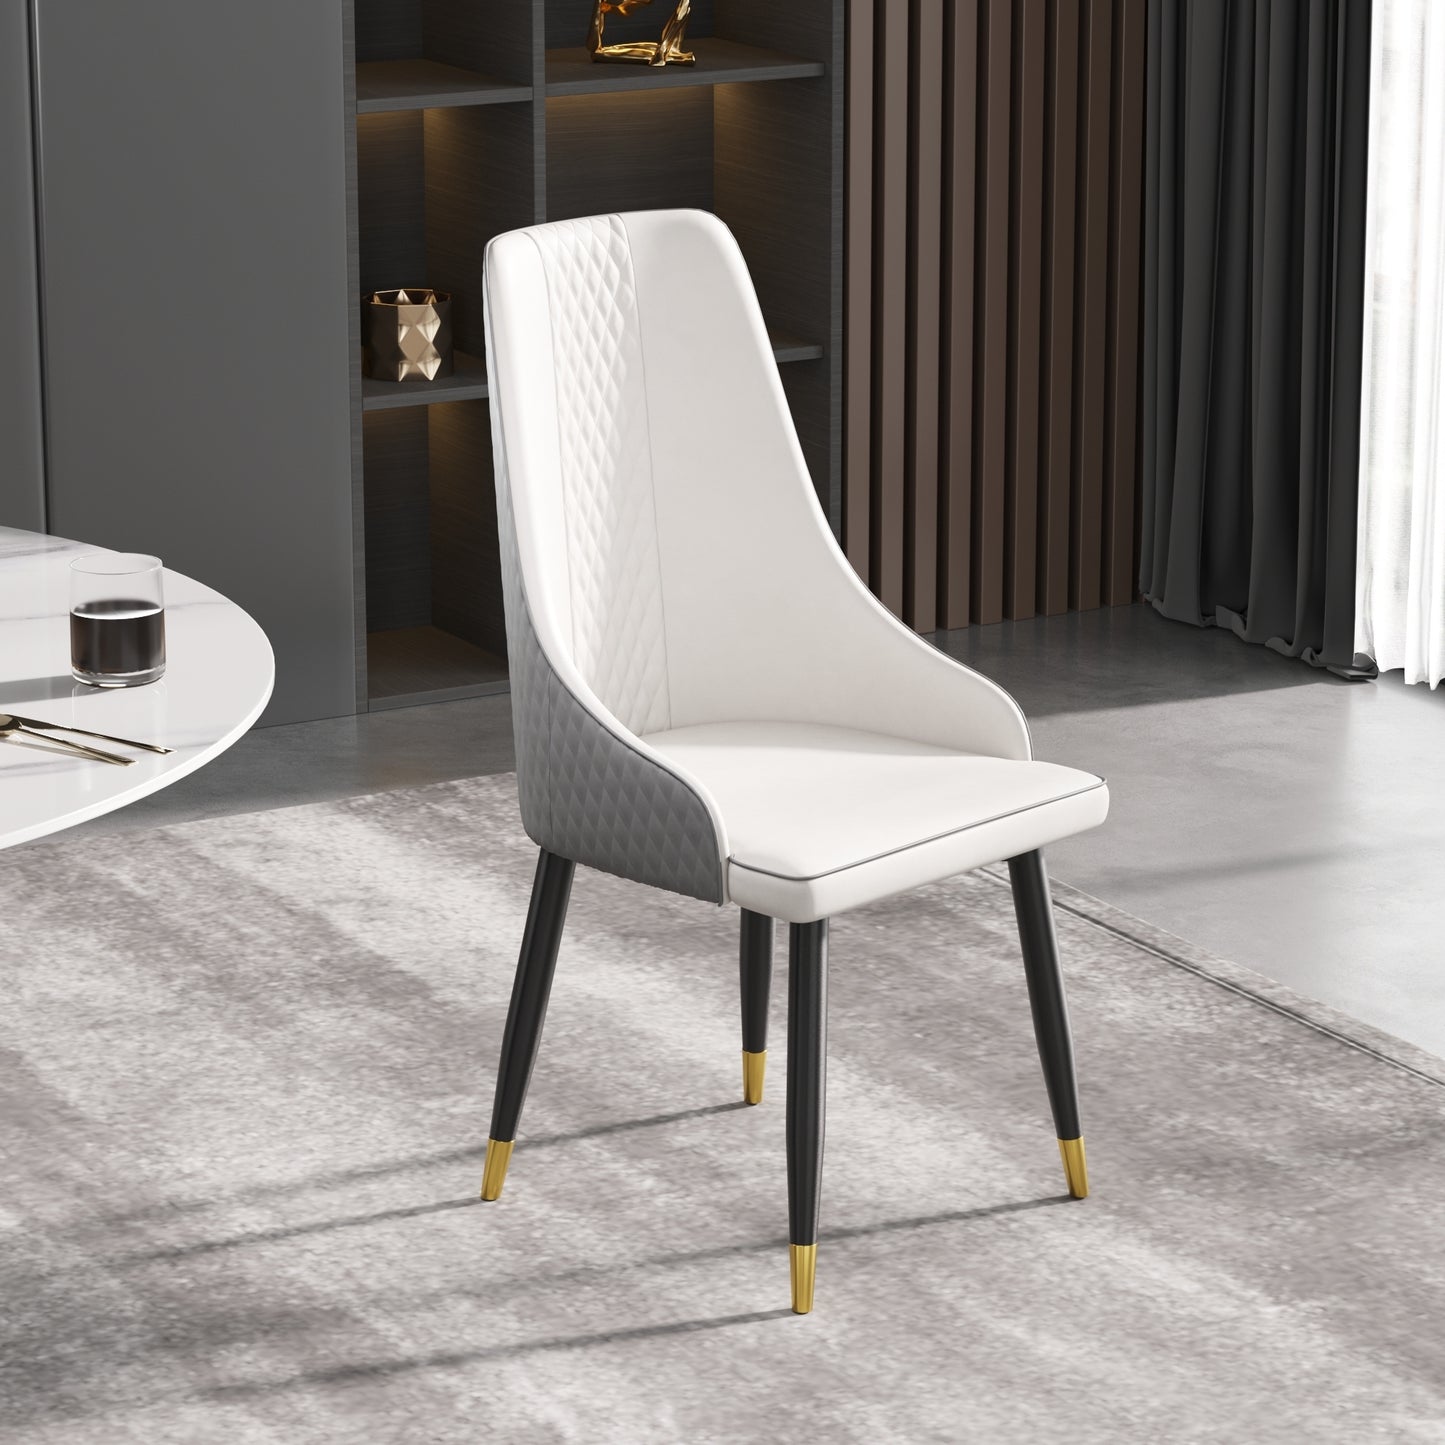 Modern dining chair PU leather metal legs-white+gray-2pcs/ctn